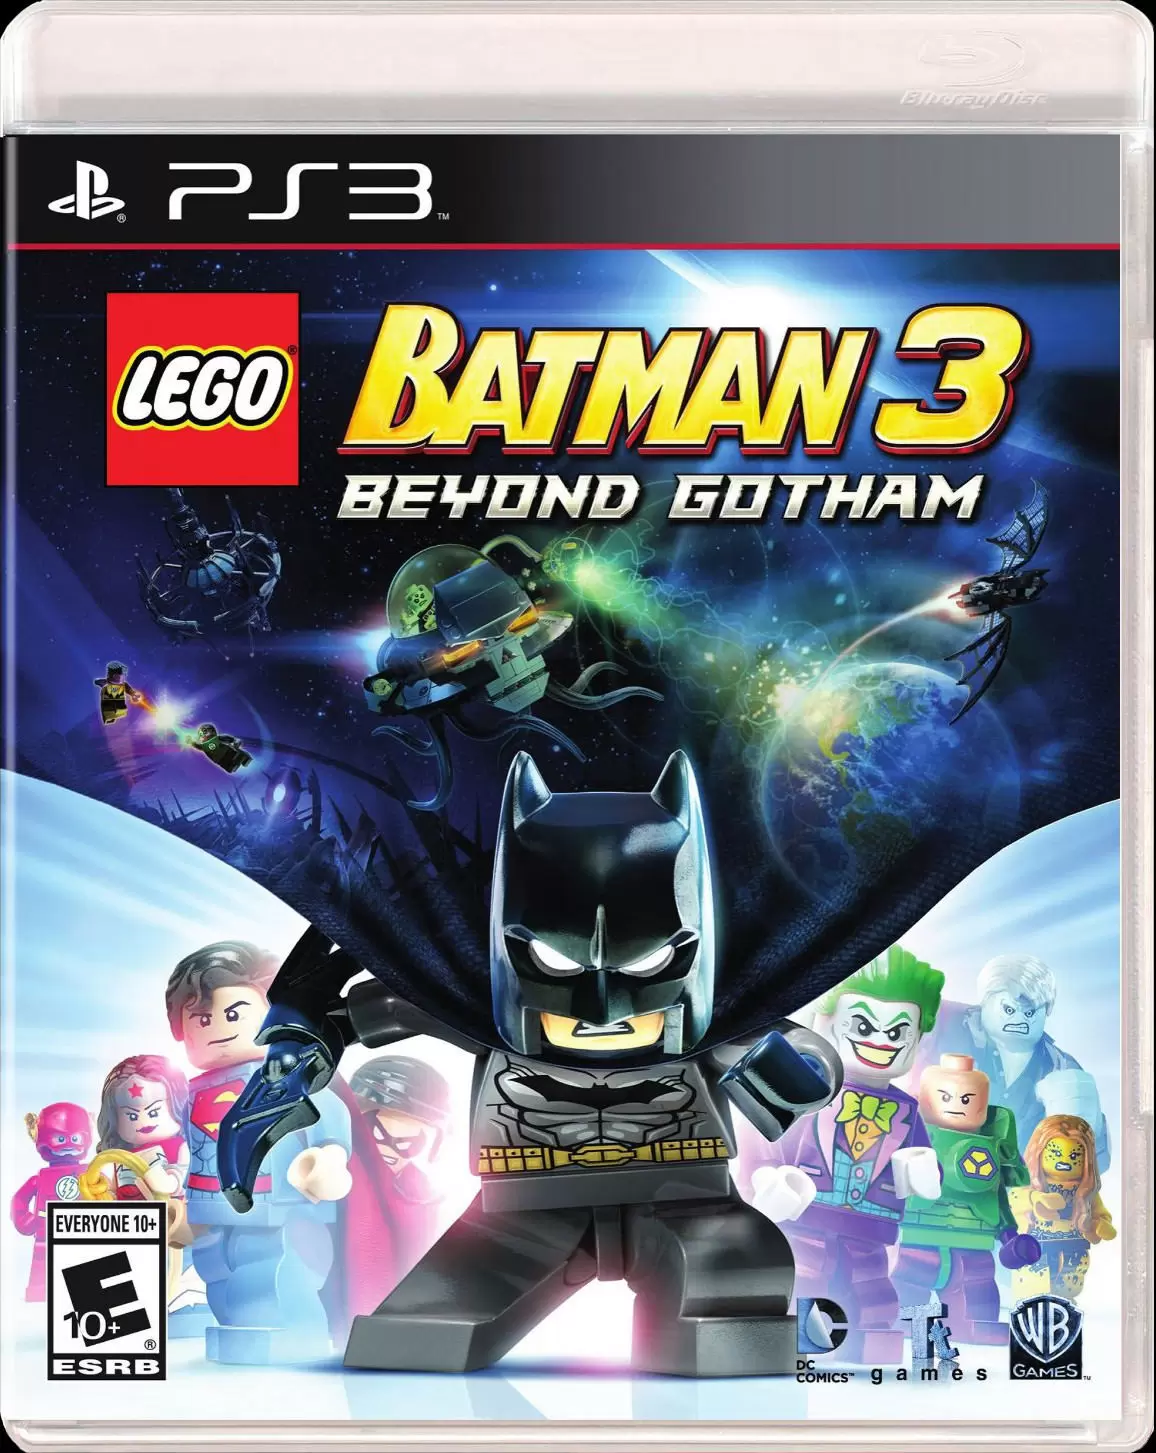 PS3 Games - LEGO Batman 3: Beyond Gotham